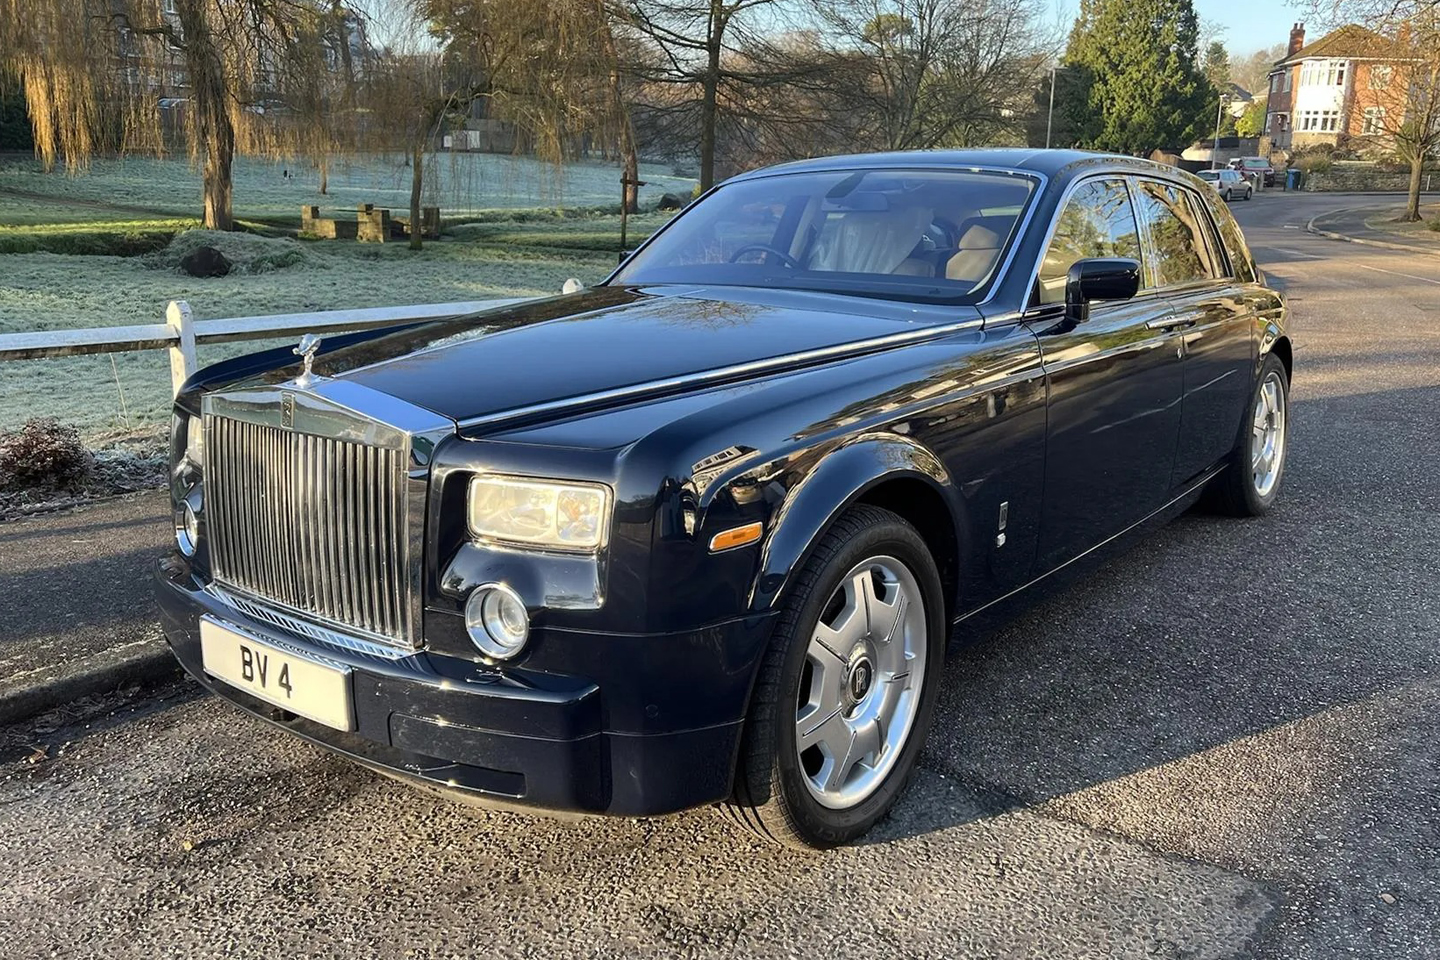 RollsRoyce Phantom review the most luxurious car on the planet  British  GQ  British GQ